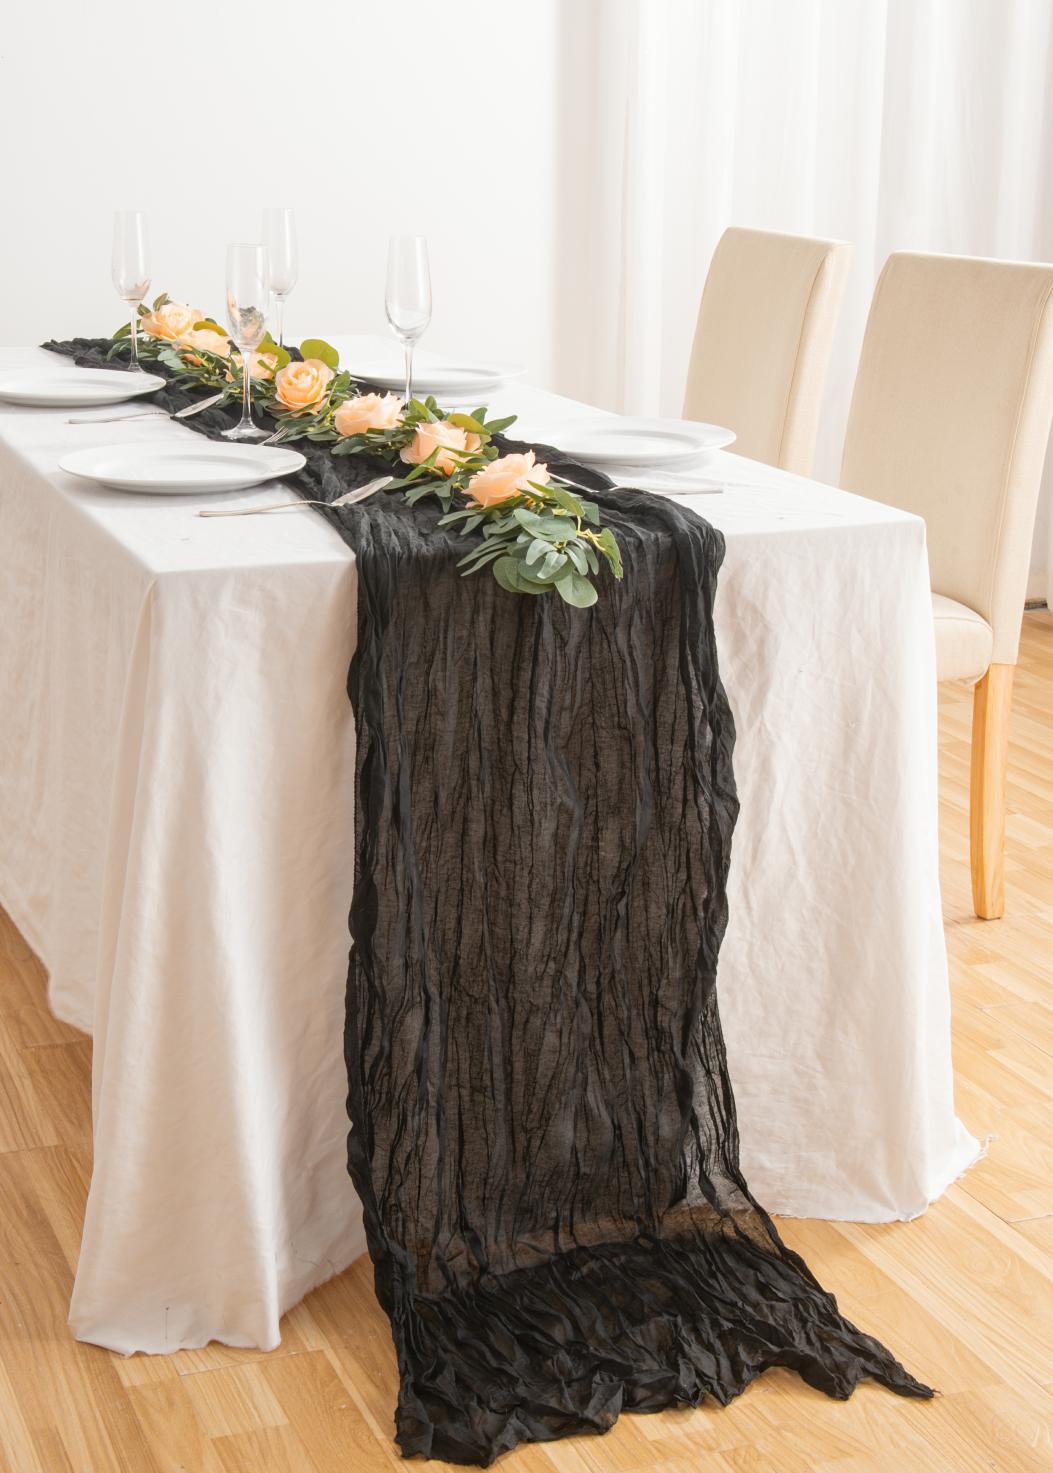 Camino de mesa de comedor de 90x180cm, decoración de mesa oxidada, decoración de boda, gasa de algodón, servilletas azules polvorientas, regalo